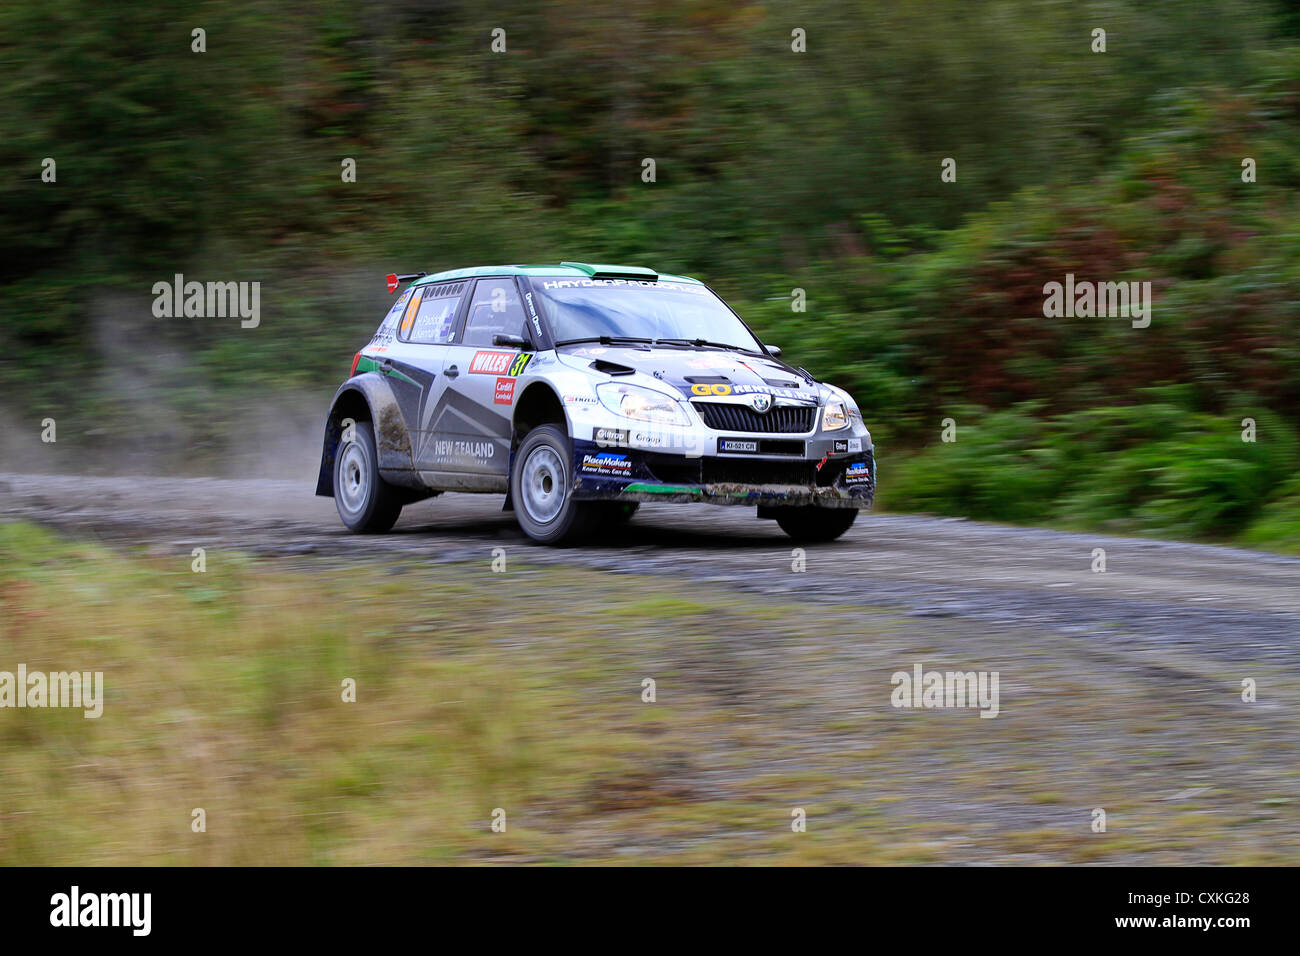 WRC 2012, Pays de Galles, skoda voiture rallye Banque D'Images